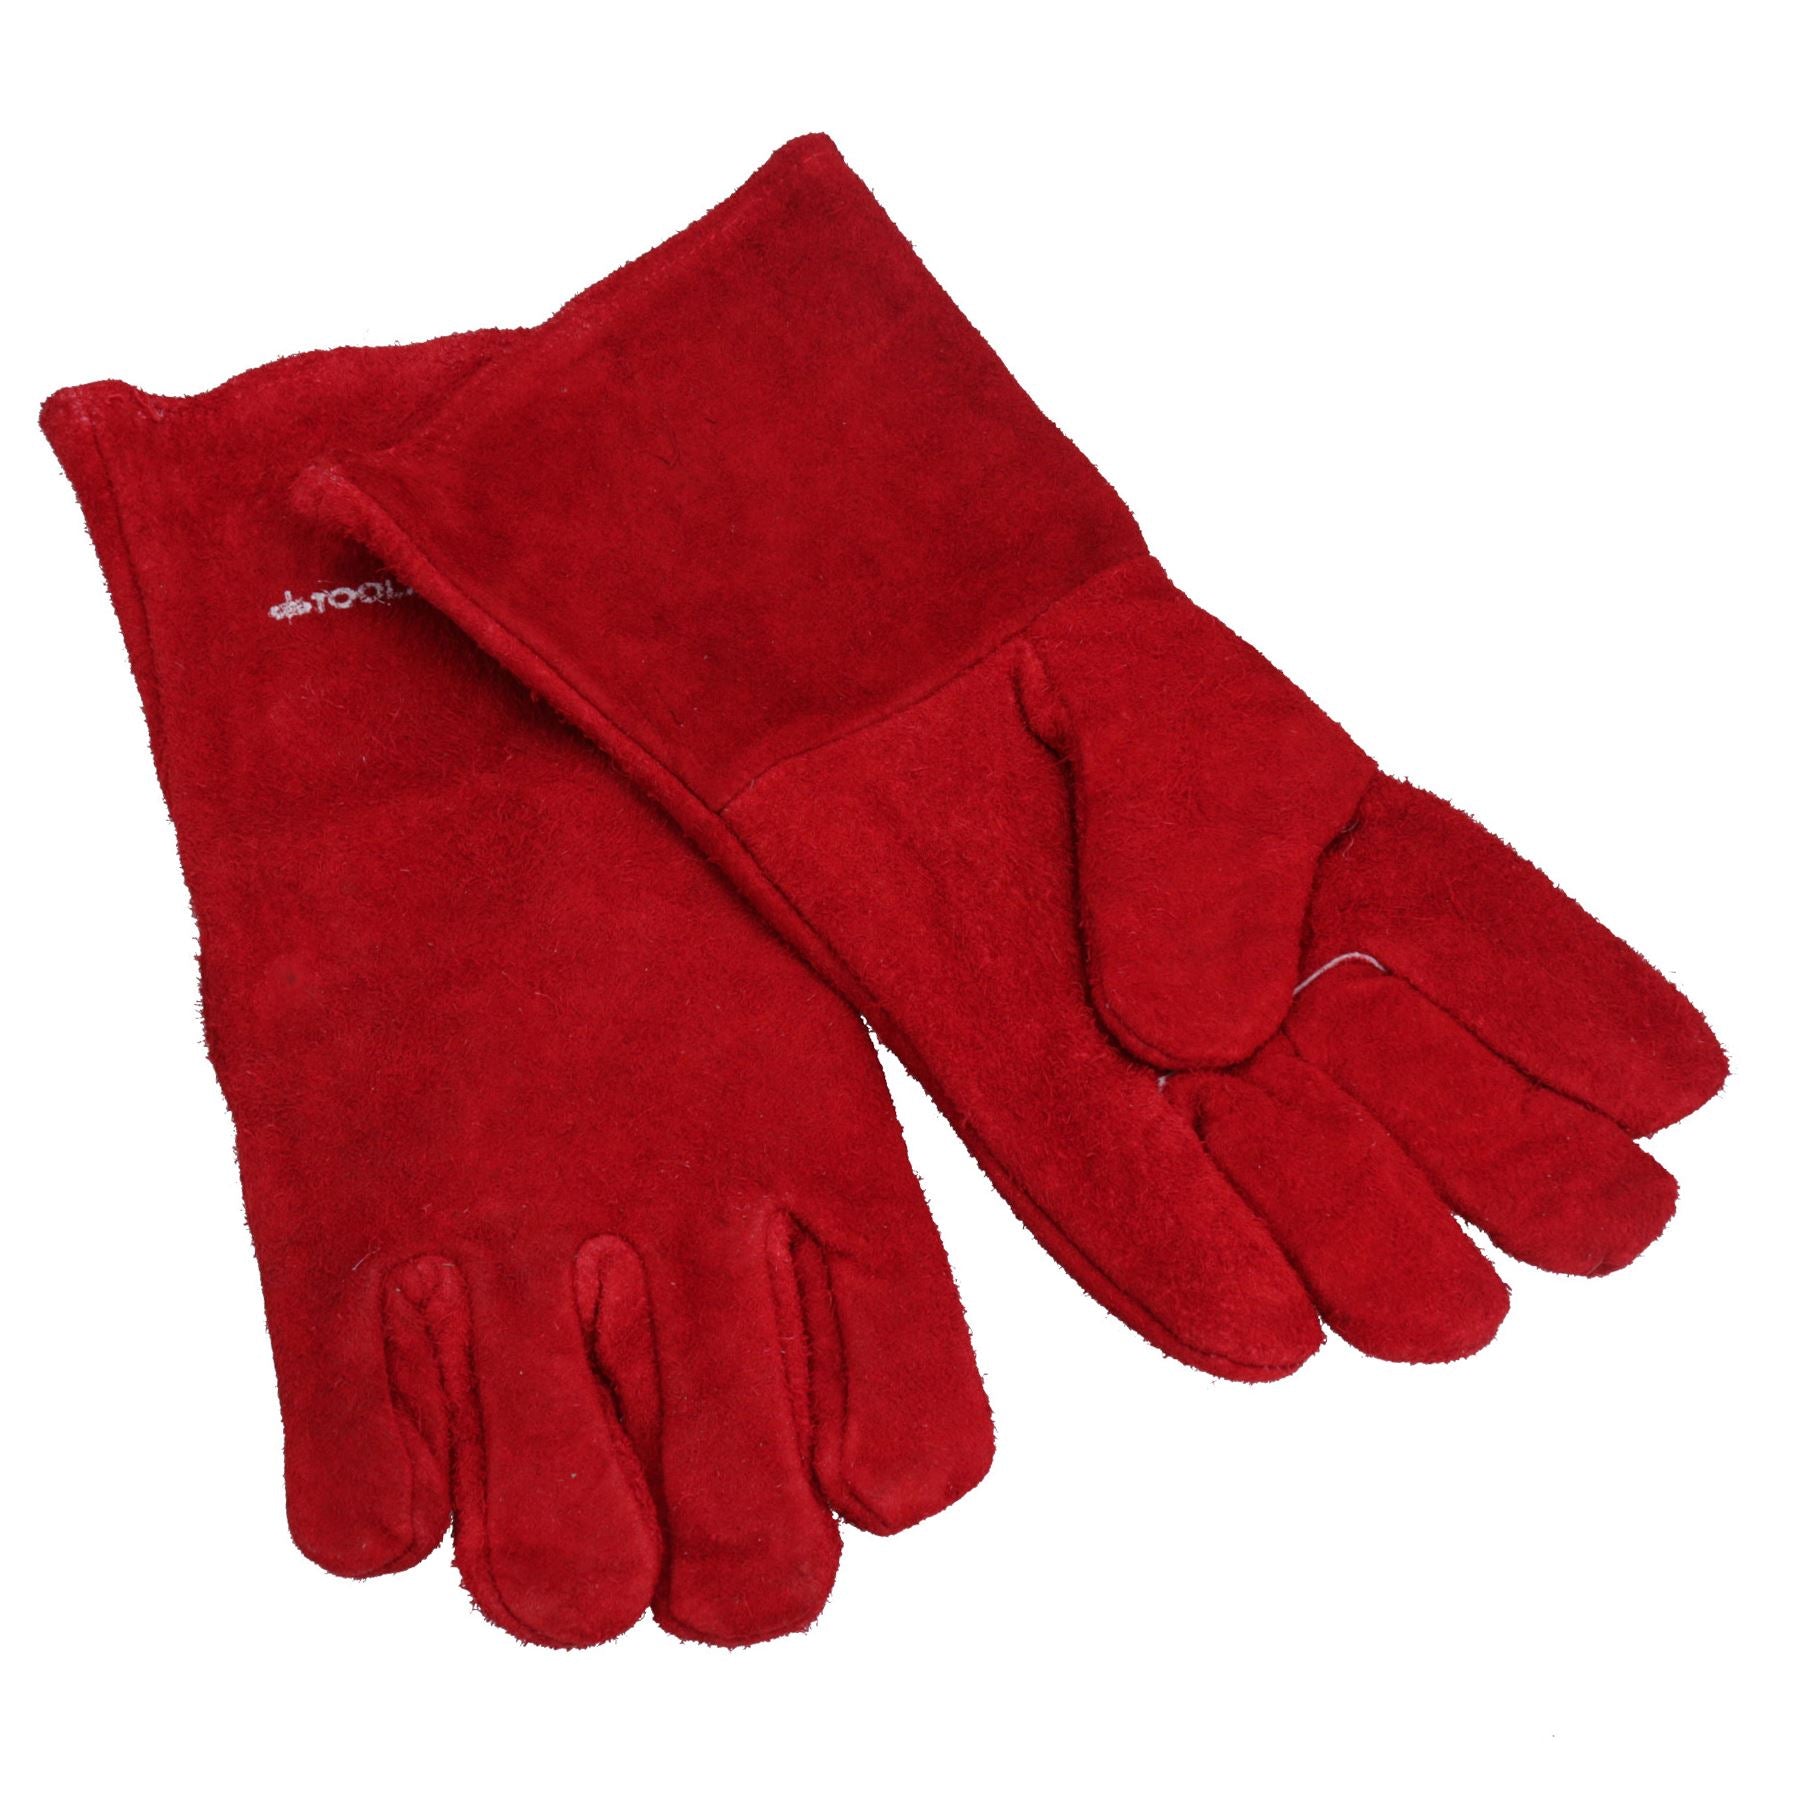 13" Metal Ashpan Ash Pan Tray For 18" Fireplace Burner & Heat Resistant Gloves